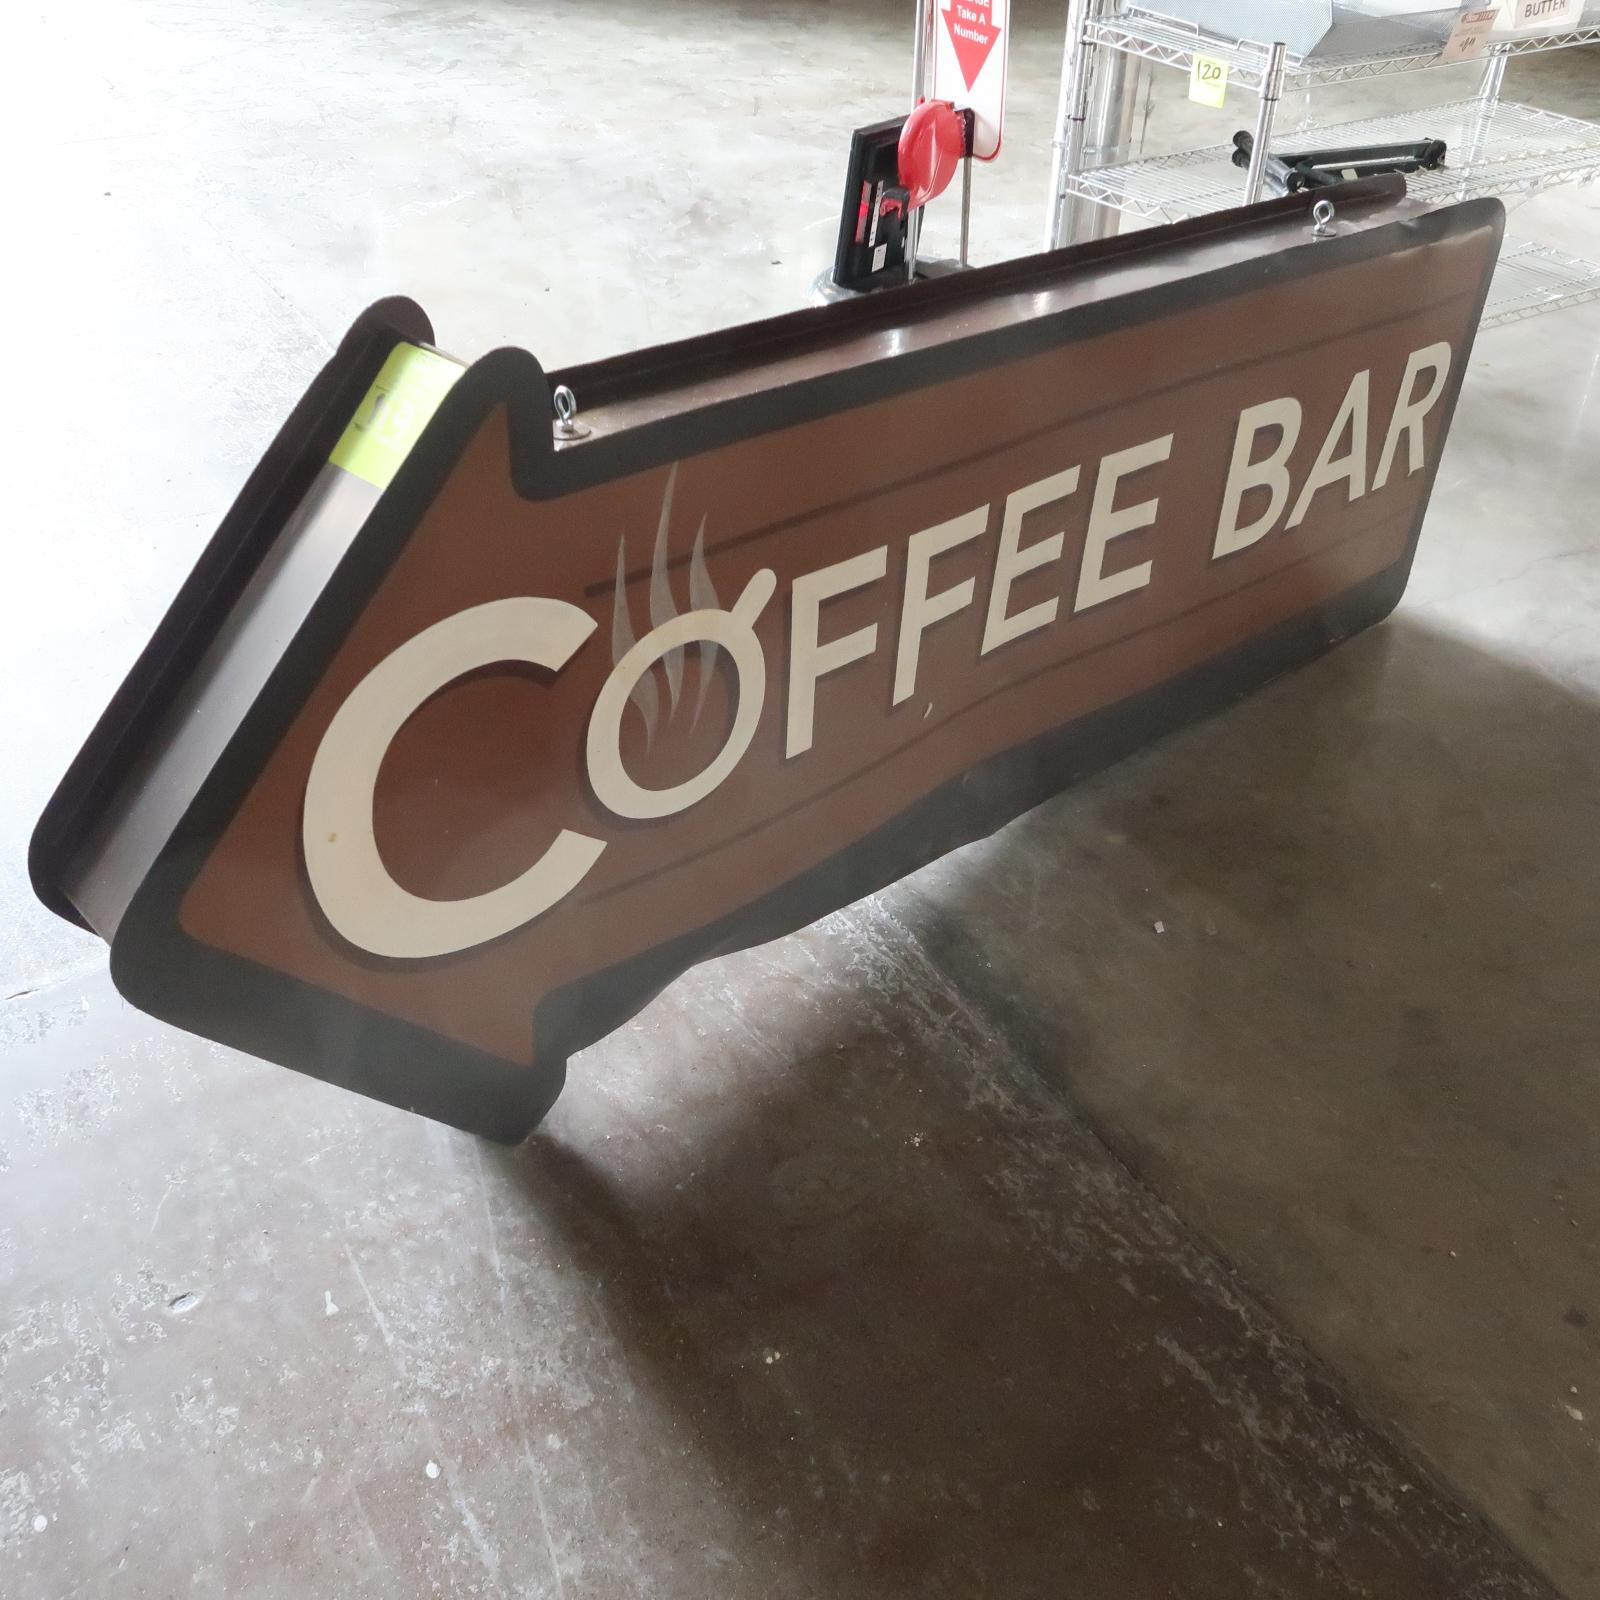 "Coffee Bar" sign